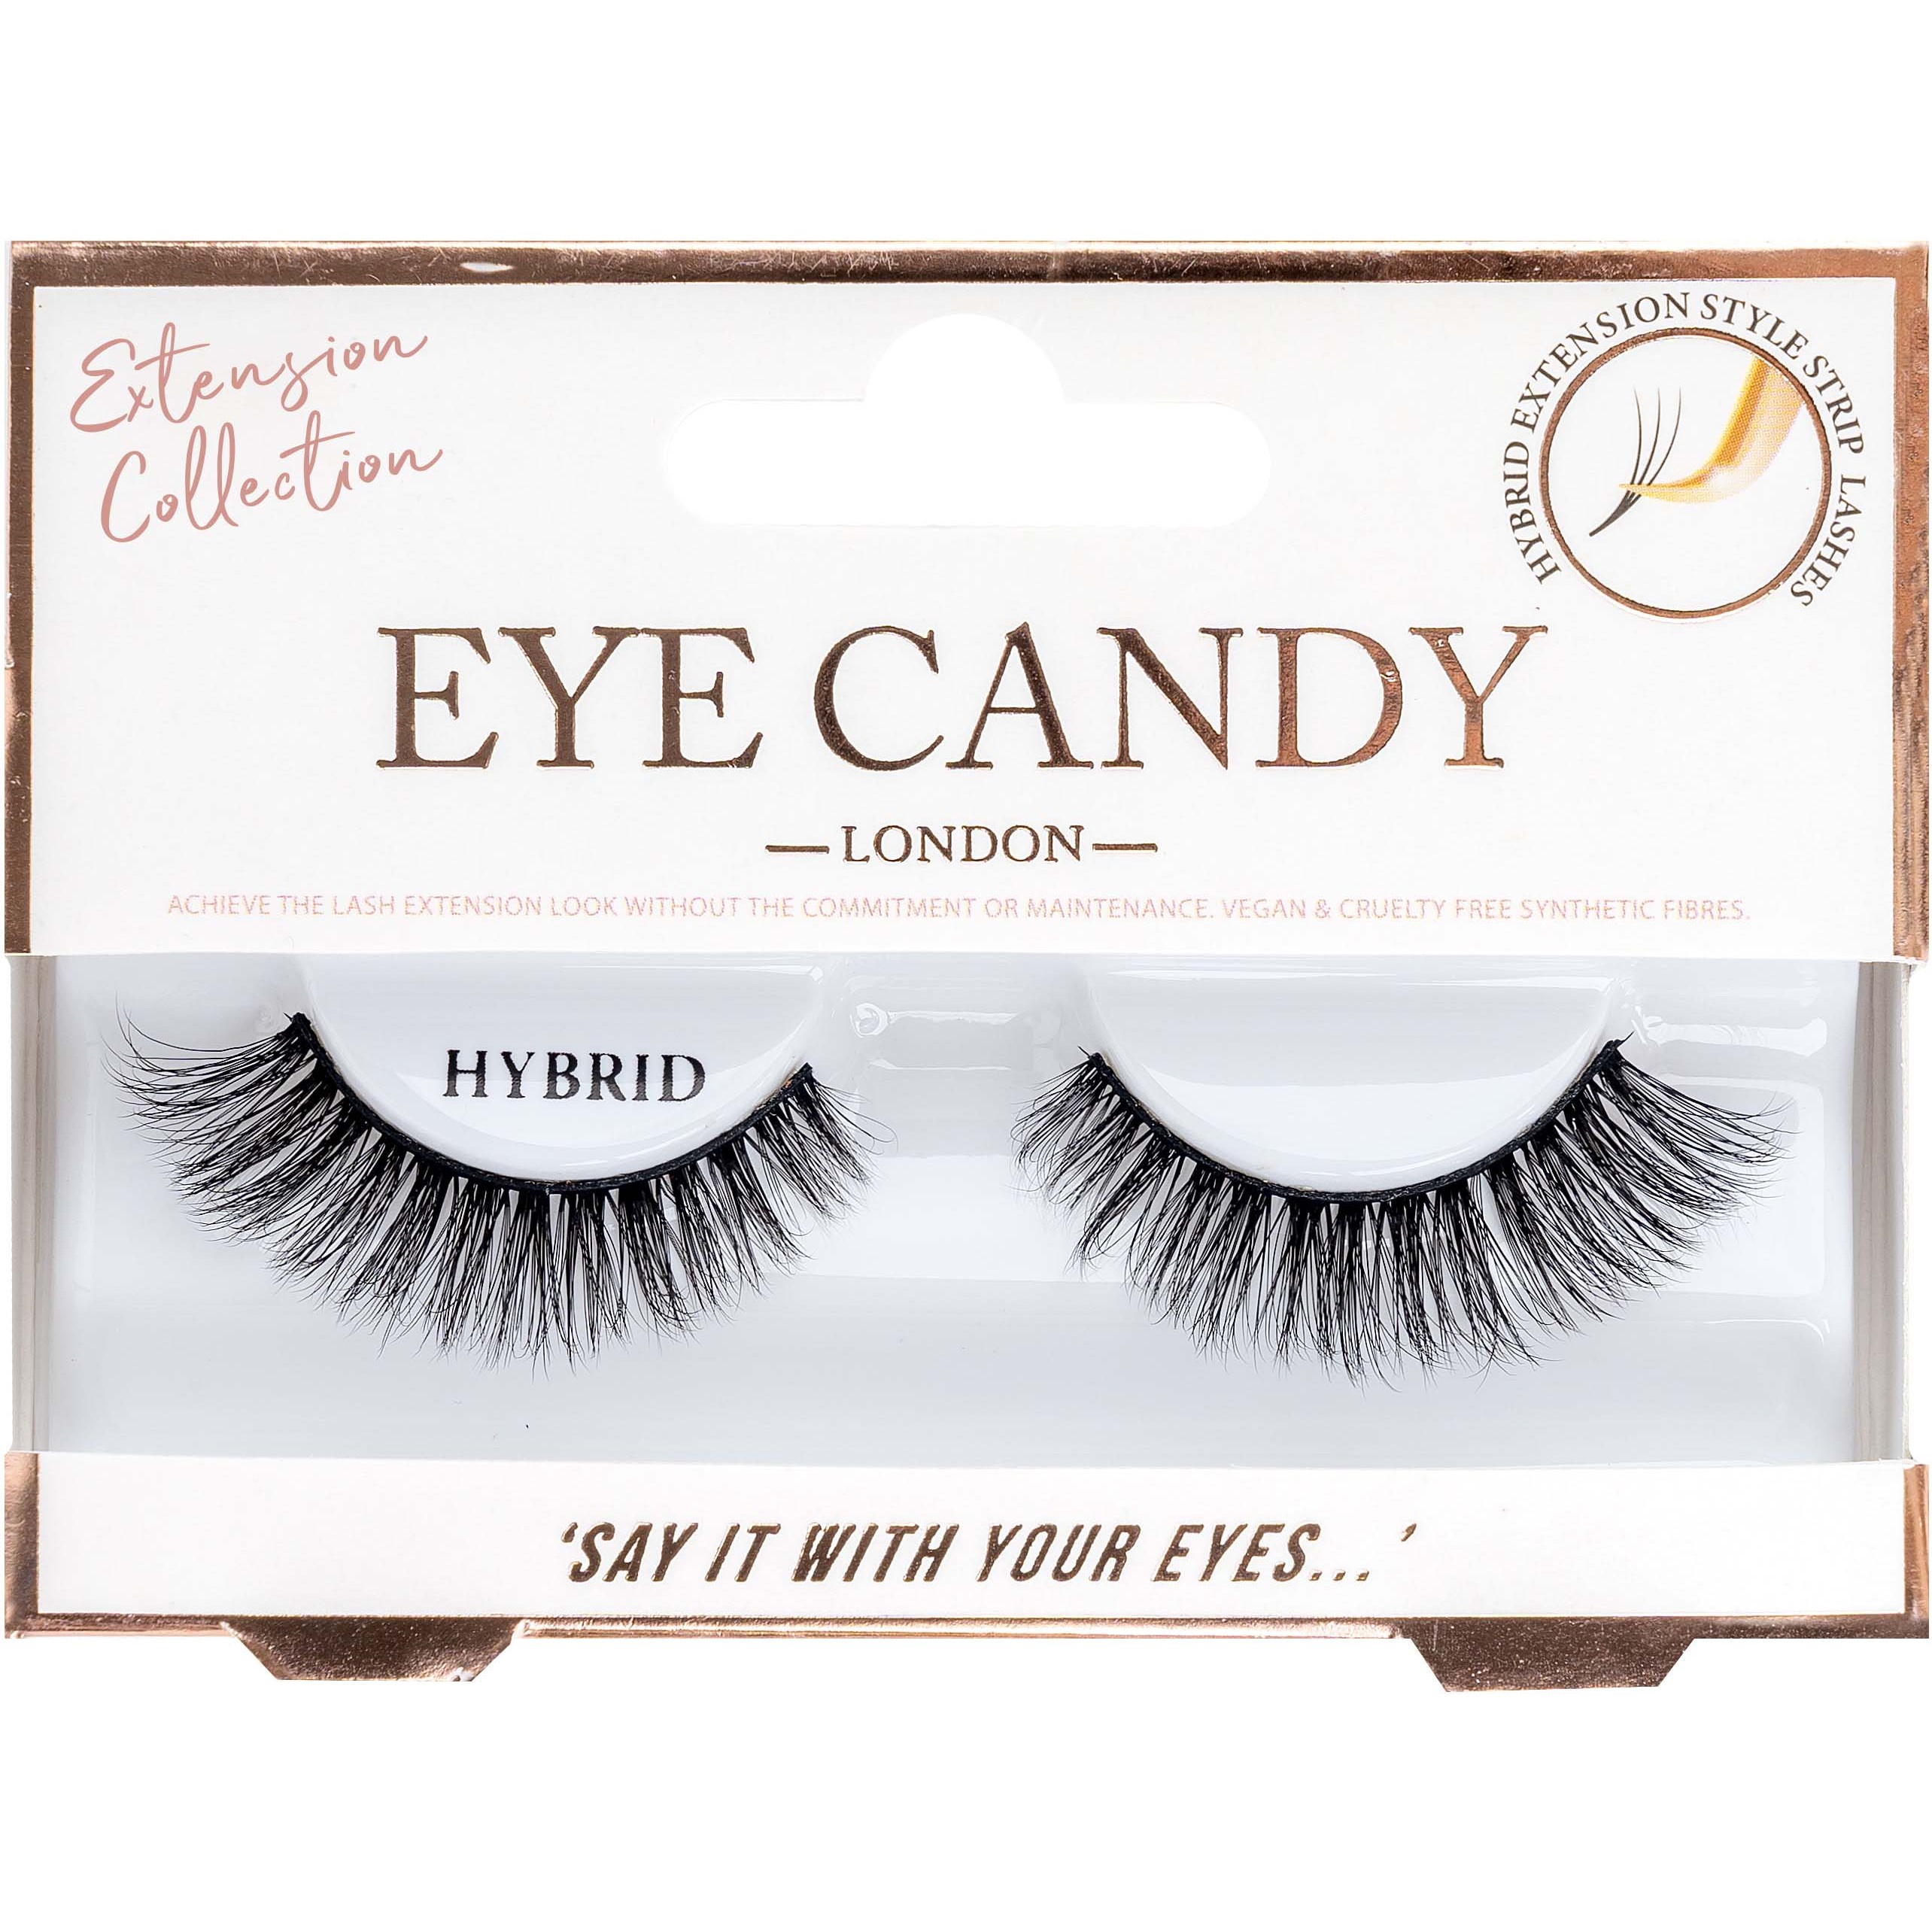 Eye CANDY Eye Candy Extension Collection Hybrid Hybrid